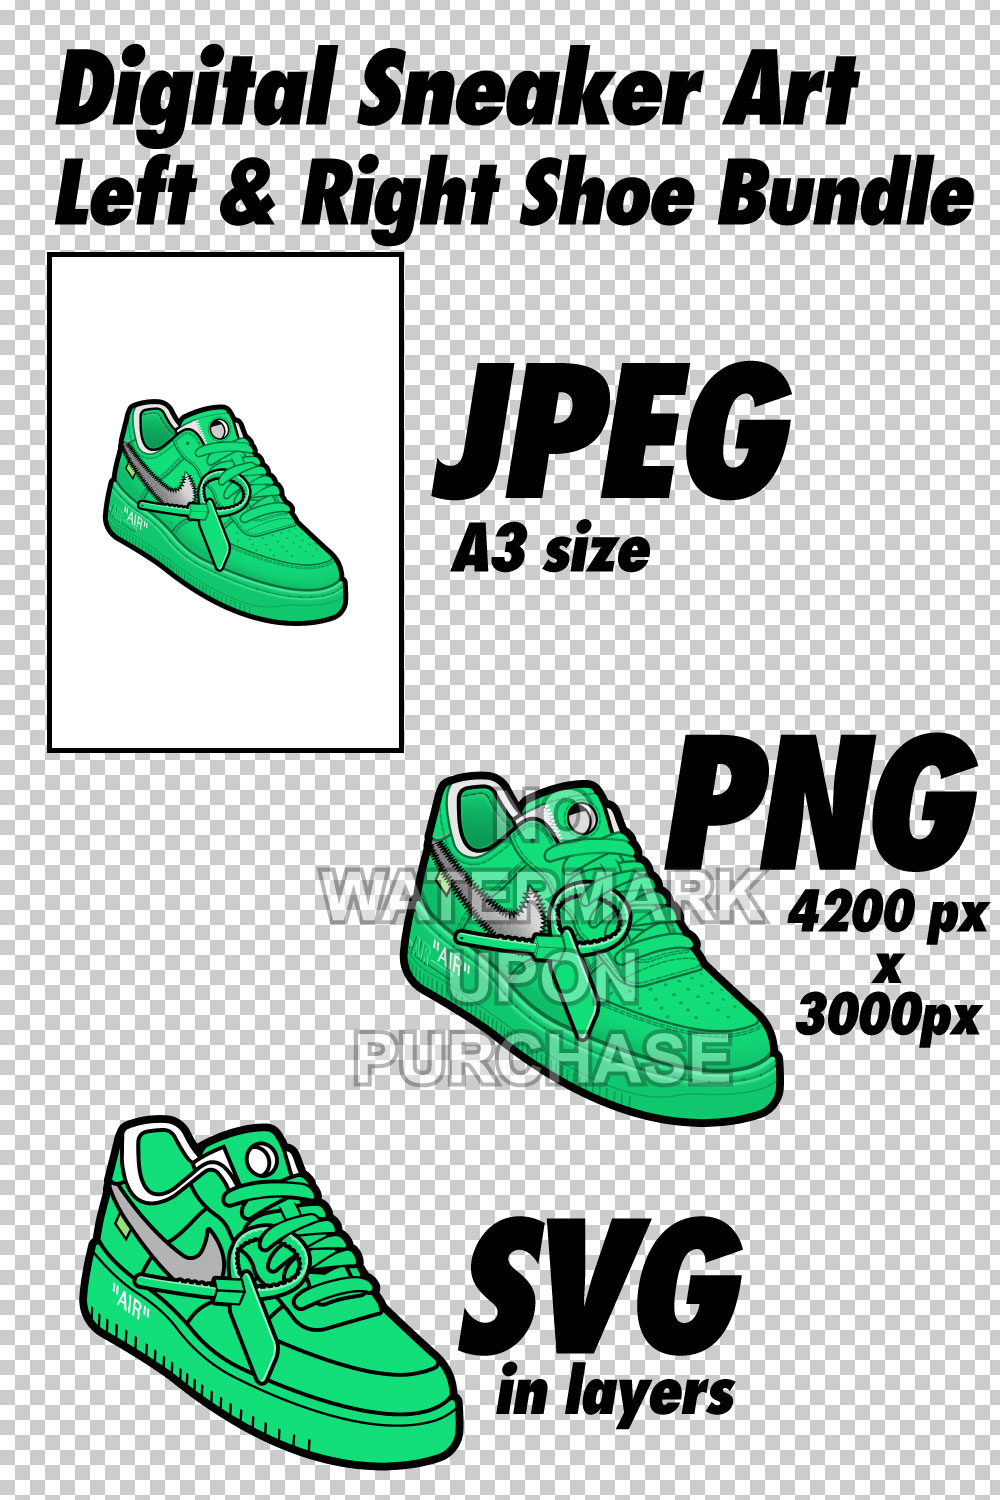 Air Force 1 Off White Green Left & Right shoe bundle JPEG PNG SVG digital download pinterest preview image.